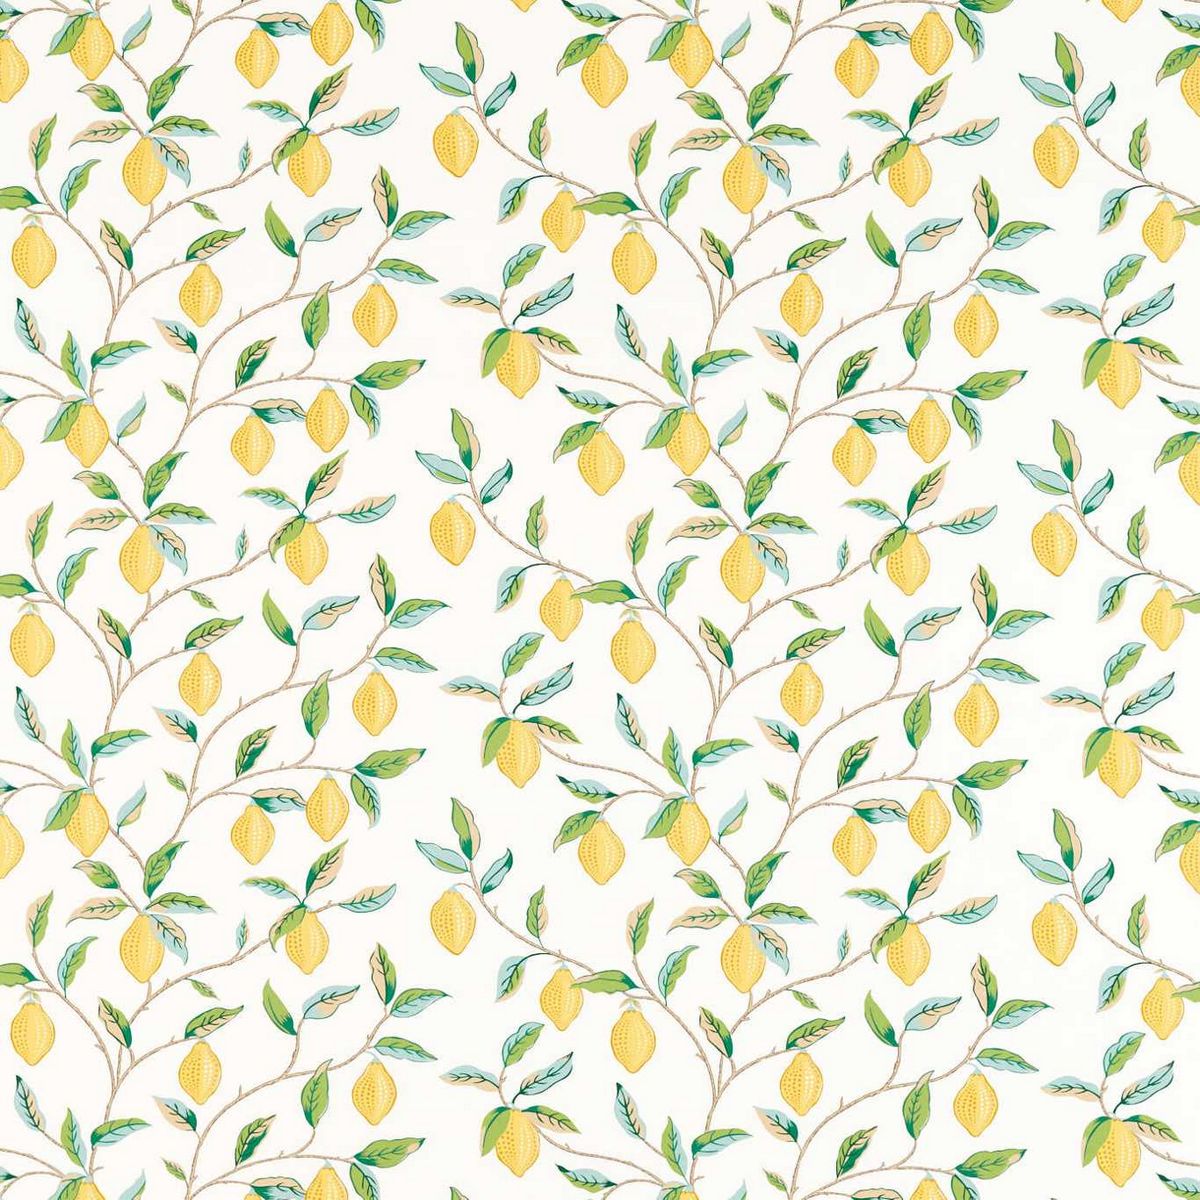 Lemon Tree Lemon/ Bayleaf Fabric by William Morris & Co.